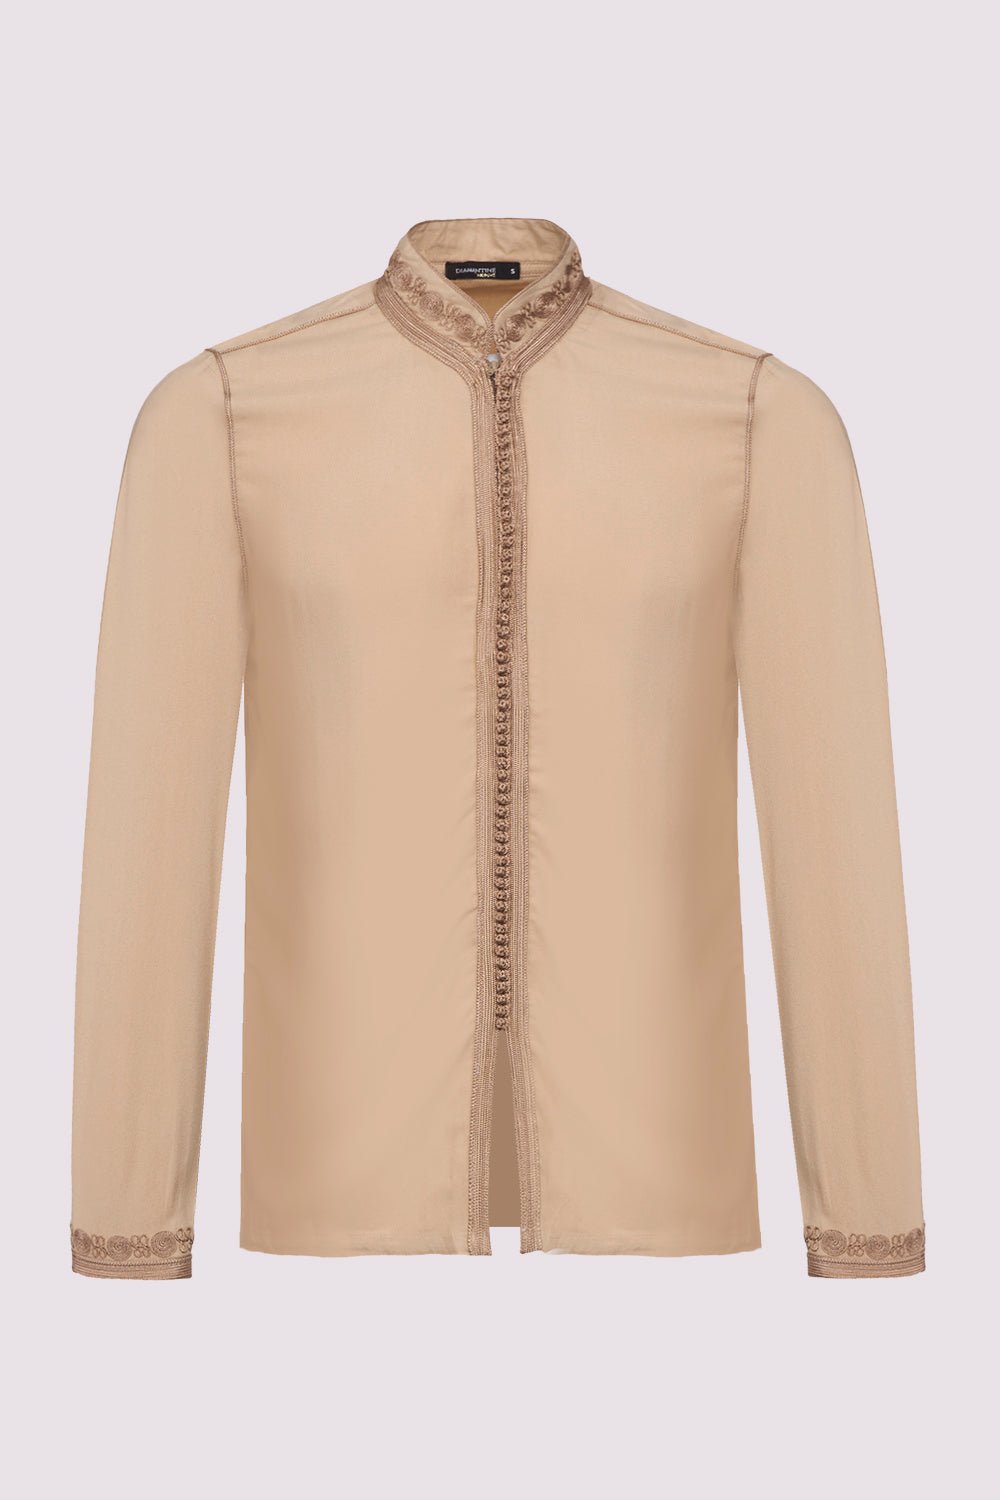 Firass Long Sleeve Men's Button-Up Embroidered Tunic Shirt in Beige